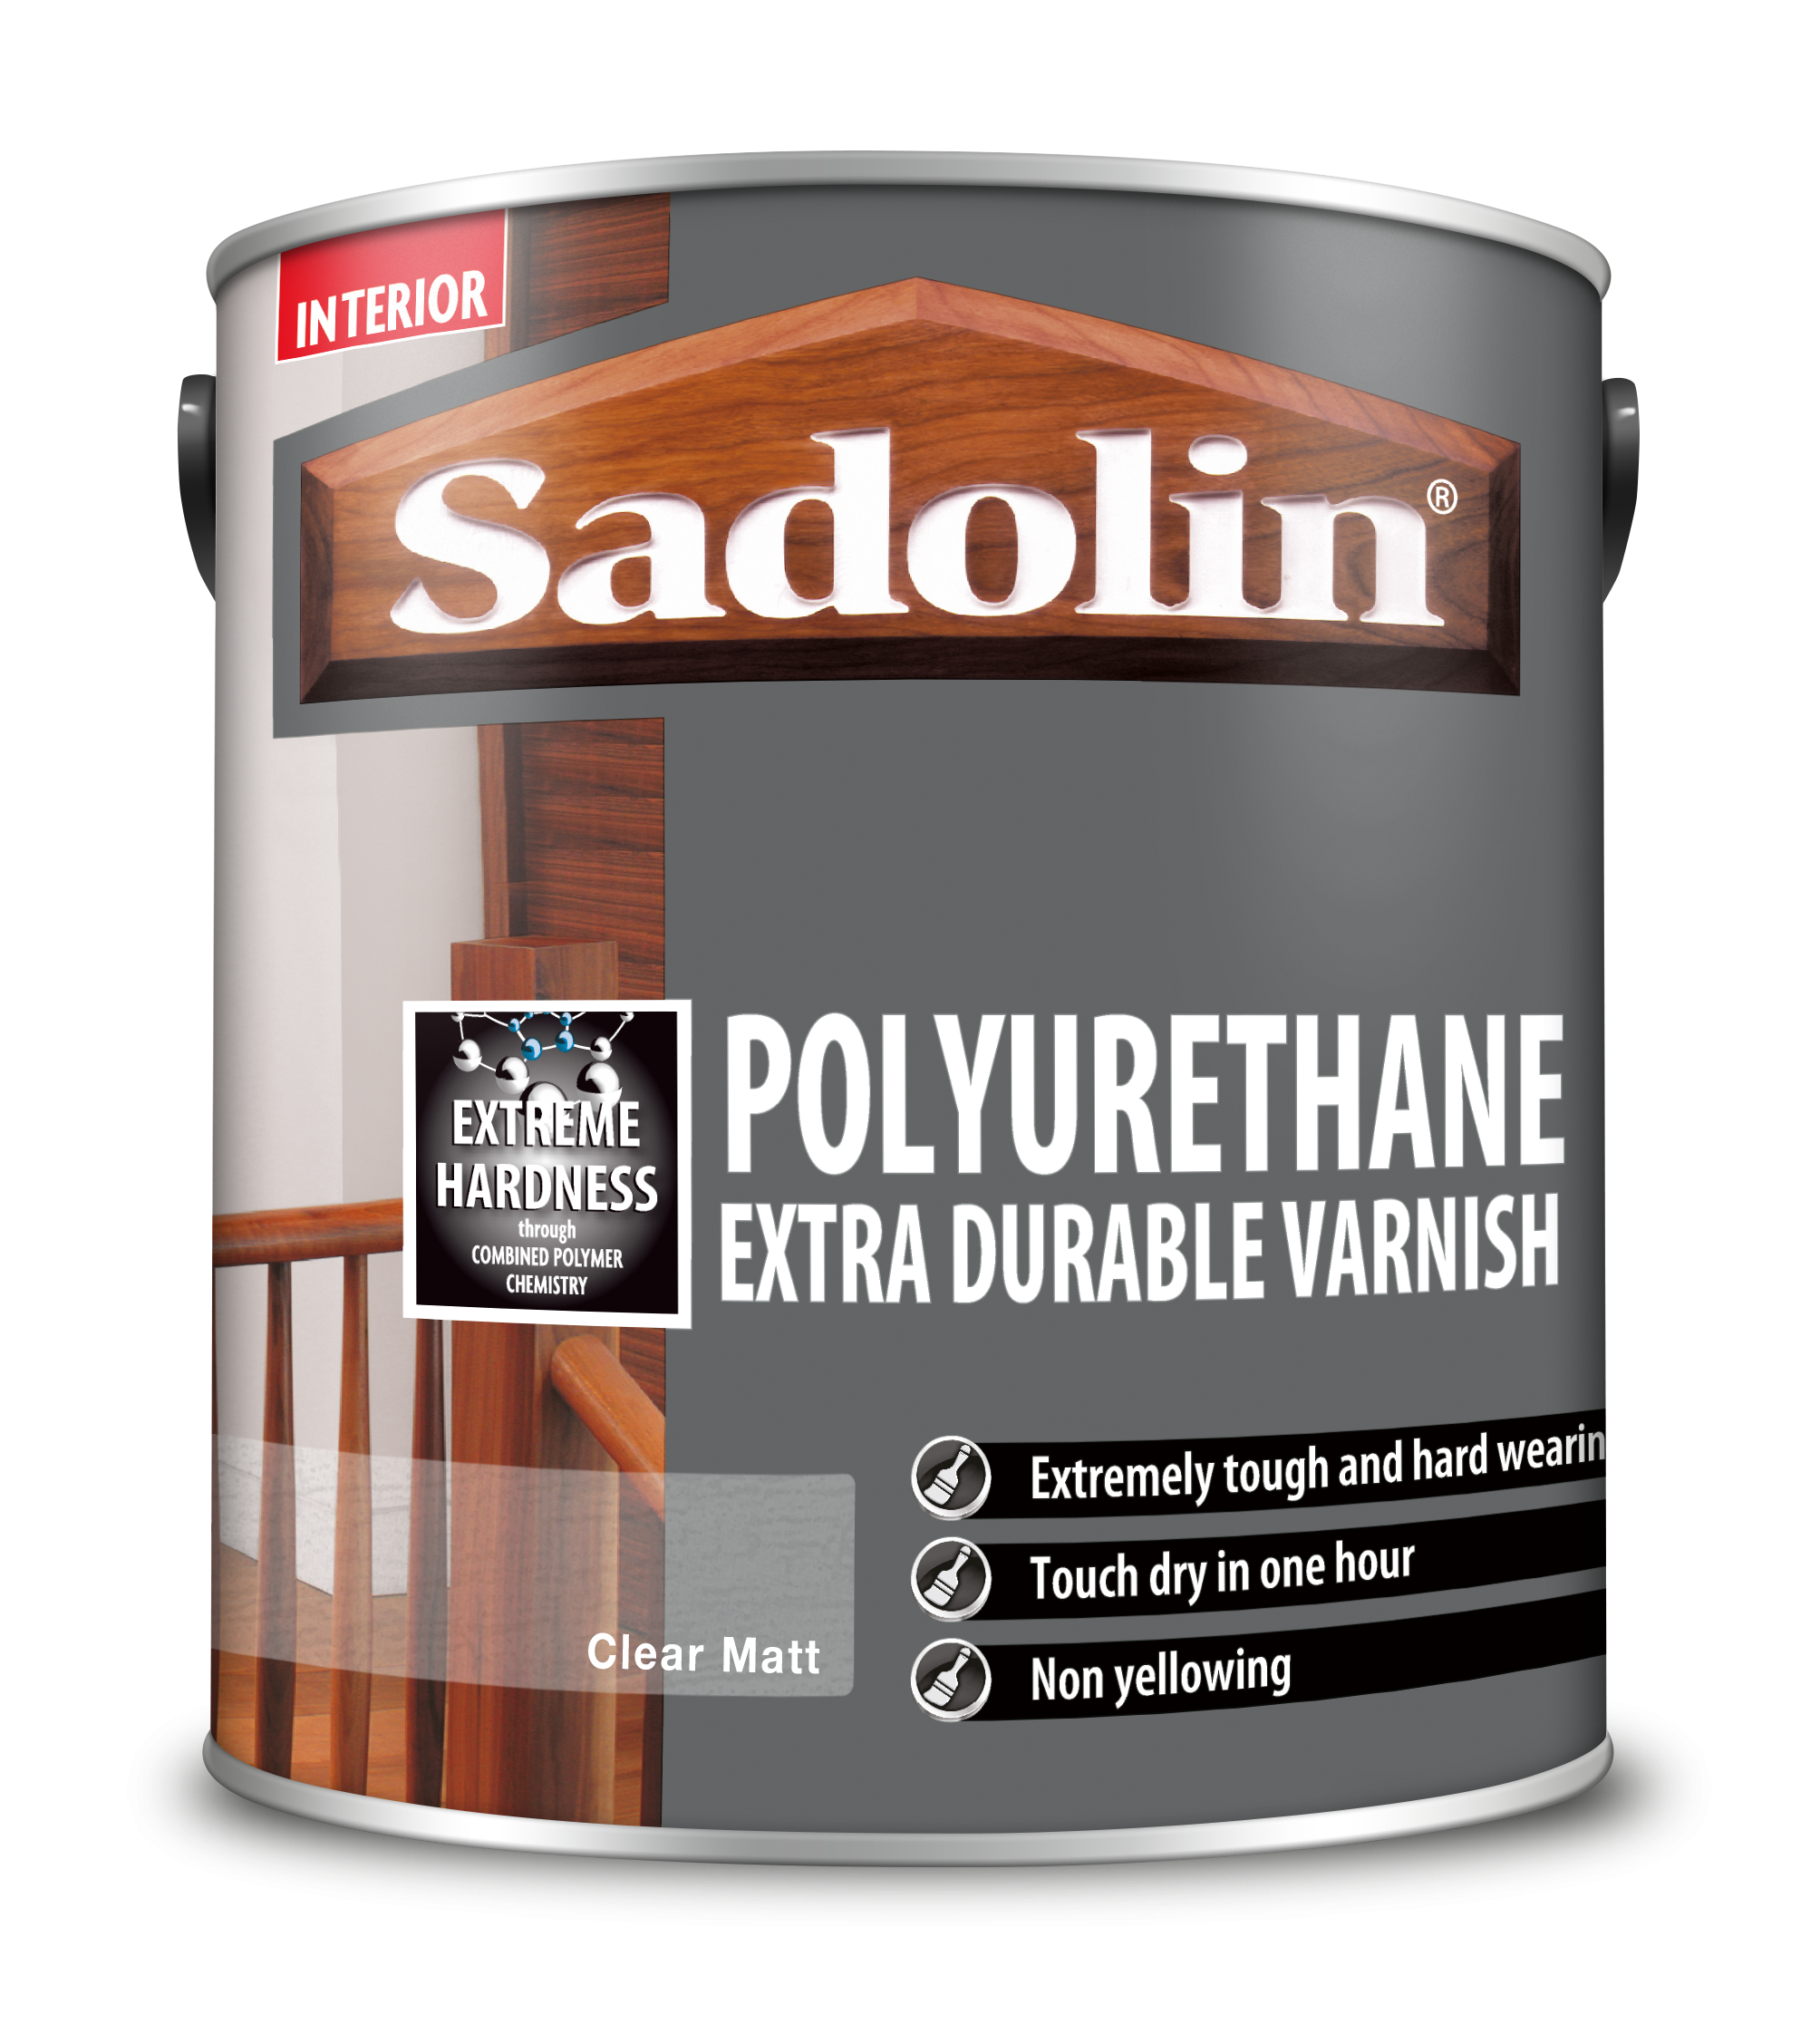 Sadolin Polyurethane Extra Durable Varnish Clear Matt 2.5L [MPPSSWN]  5038012